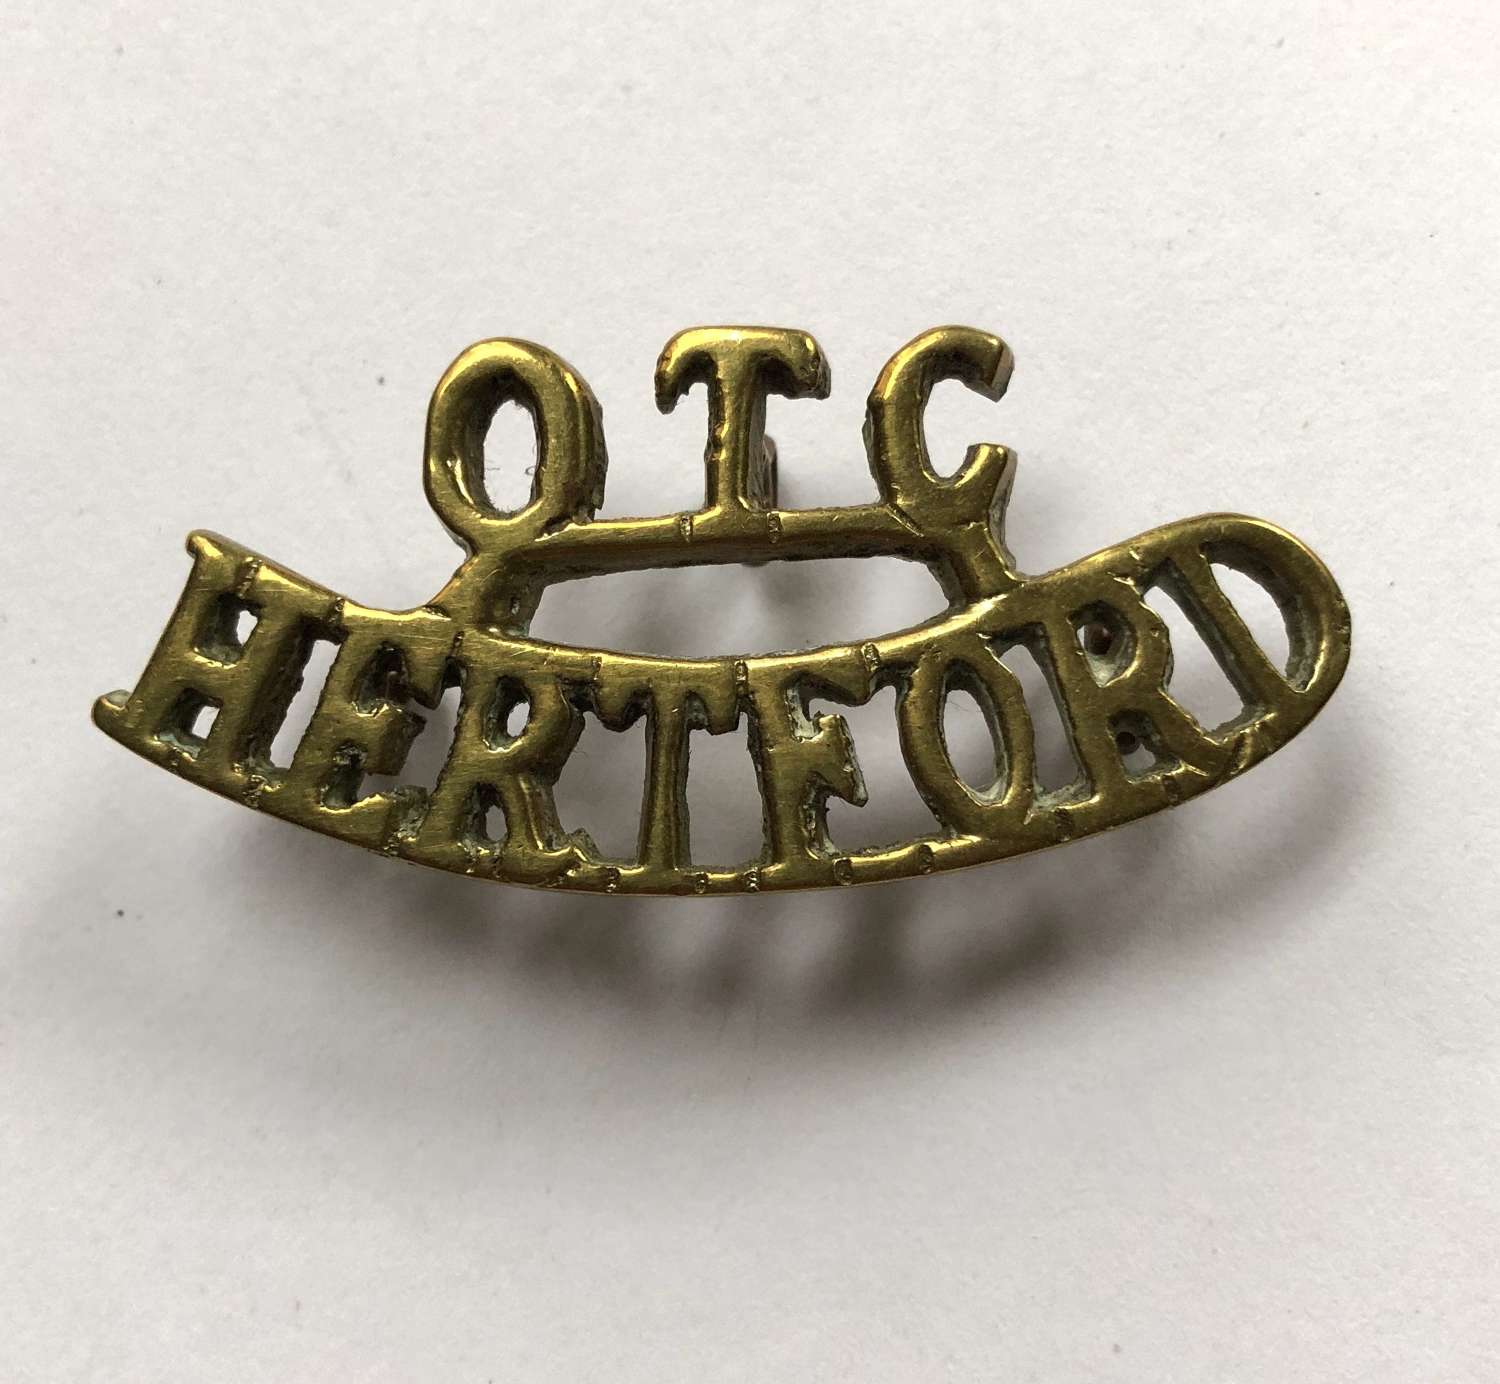 OTC / HERTFORD shoulder title circa 1908-40